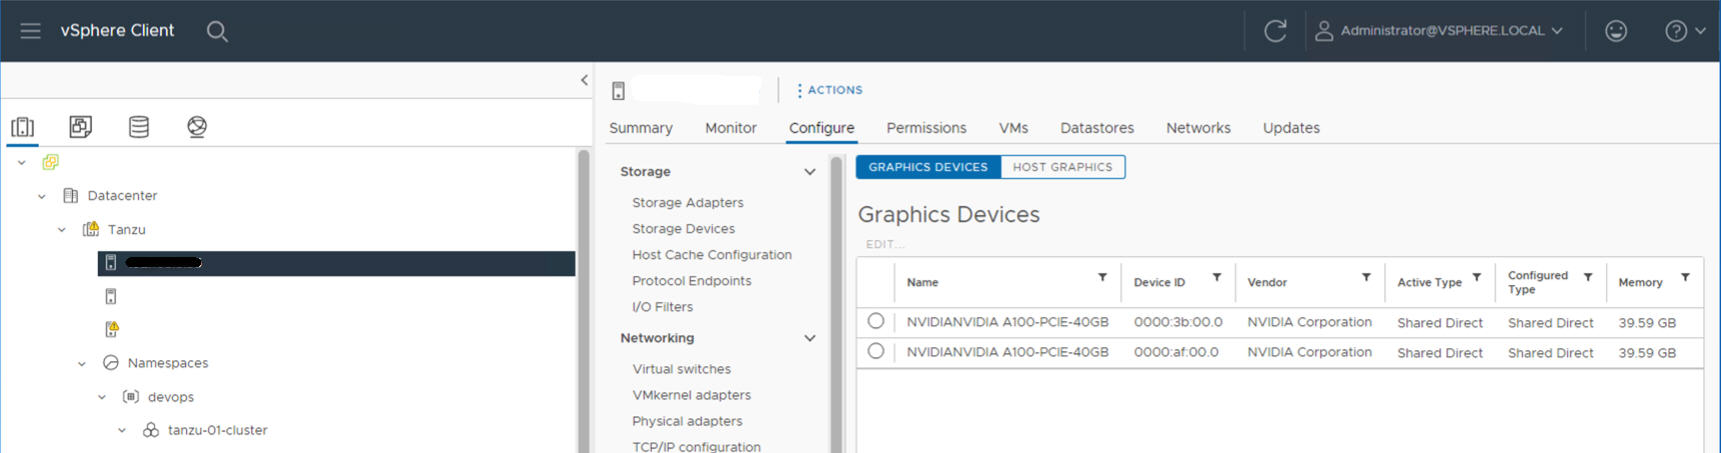 vSphere Client 中的“图形设备”选项卡列出了 NVIDIA GPU A100 设备。